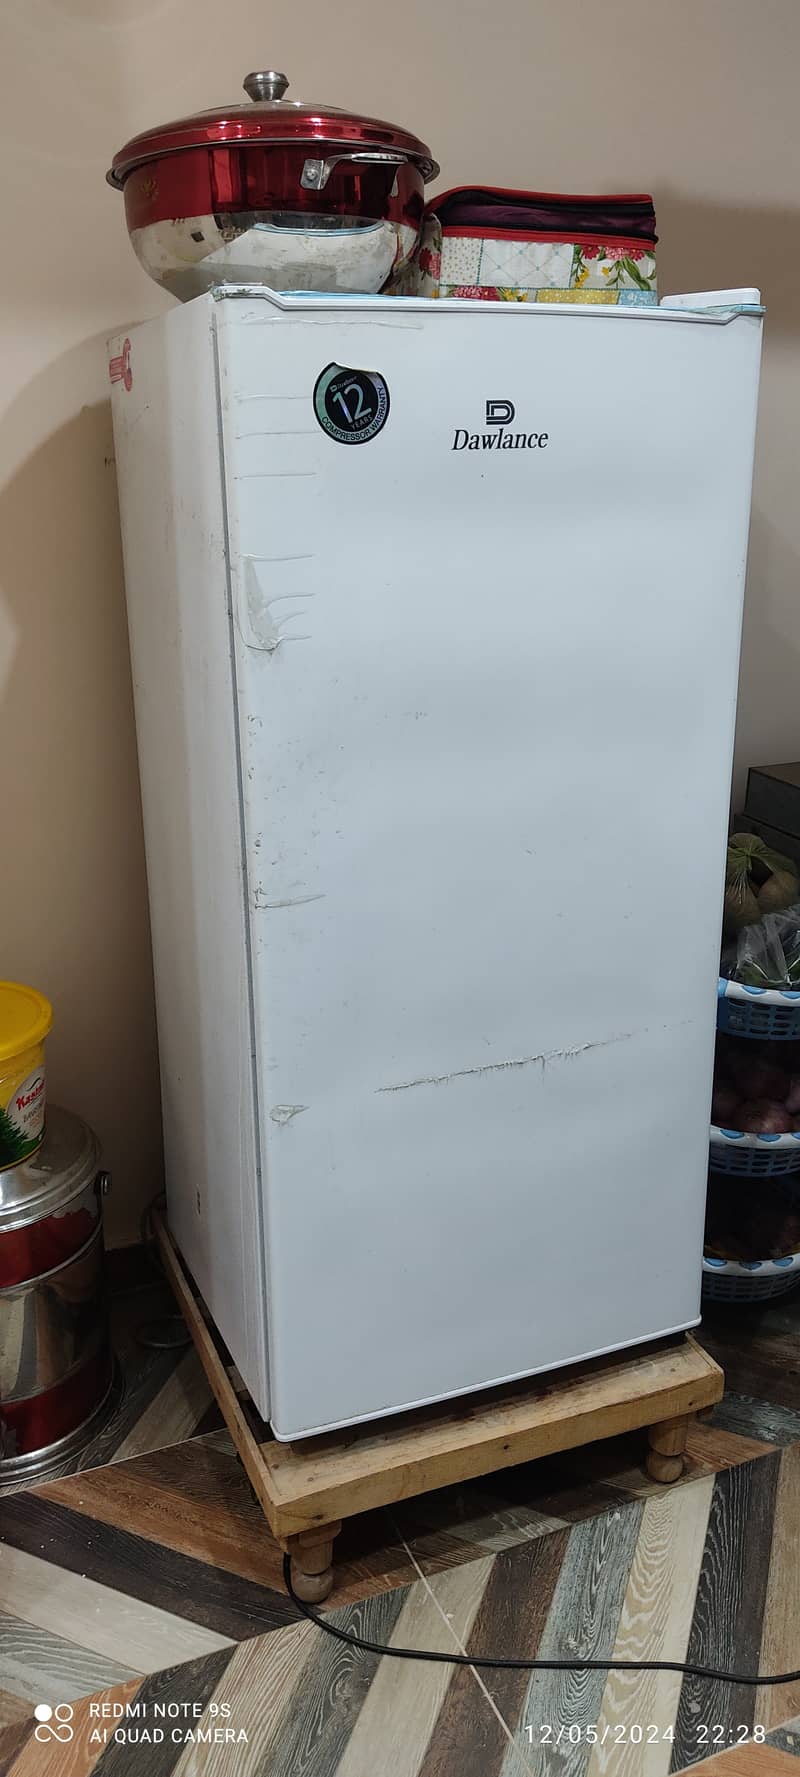 Dawlance Refrigerator 9106 white 5